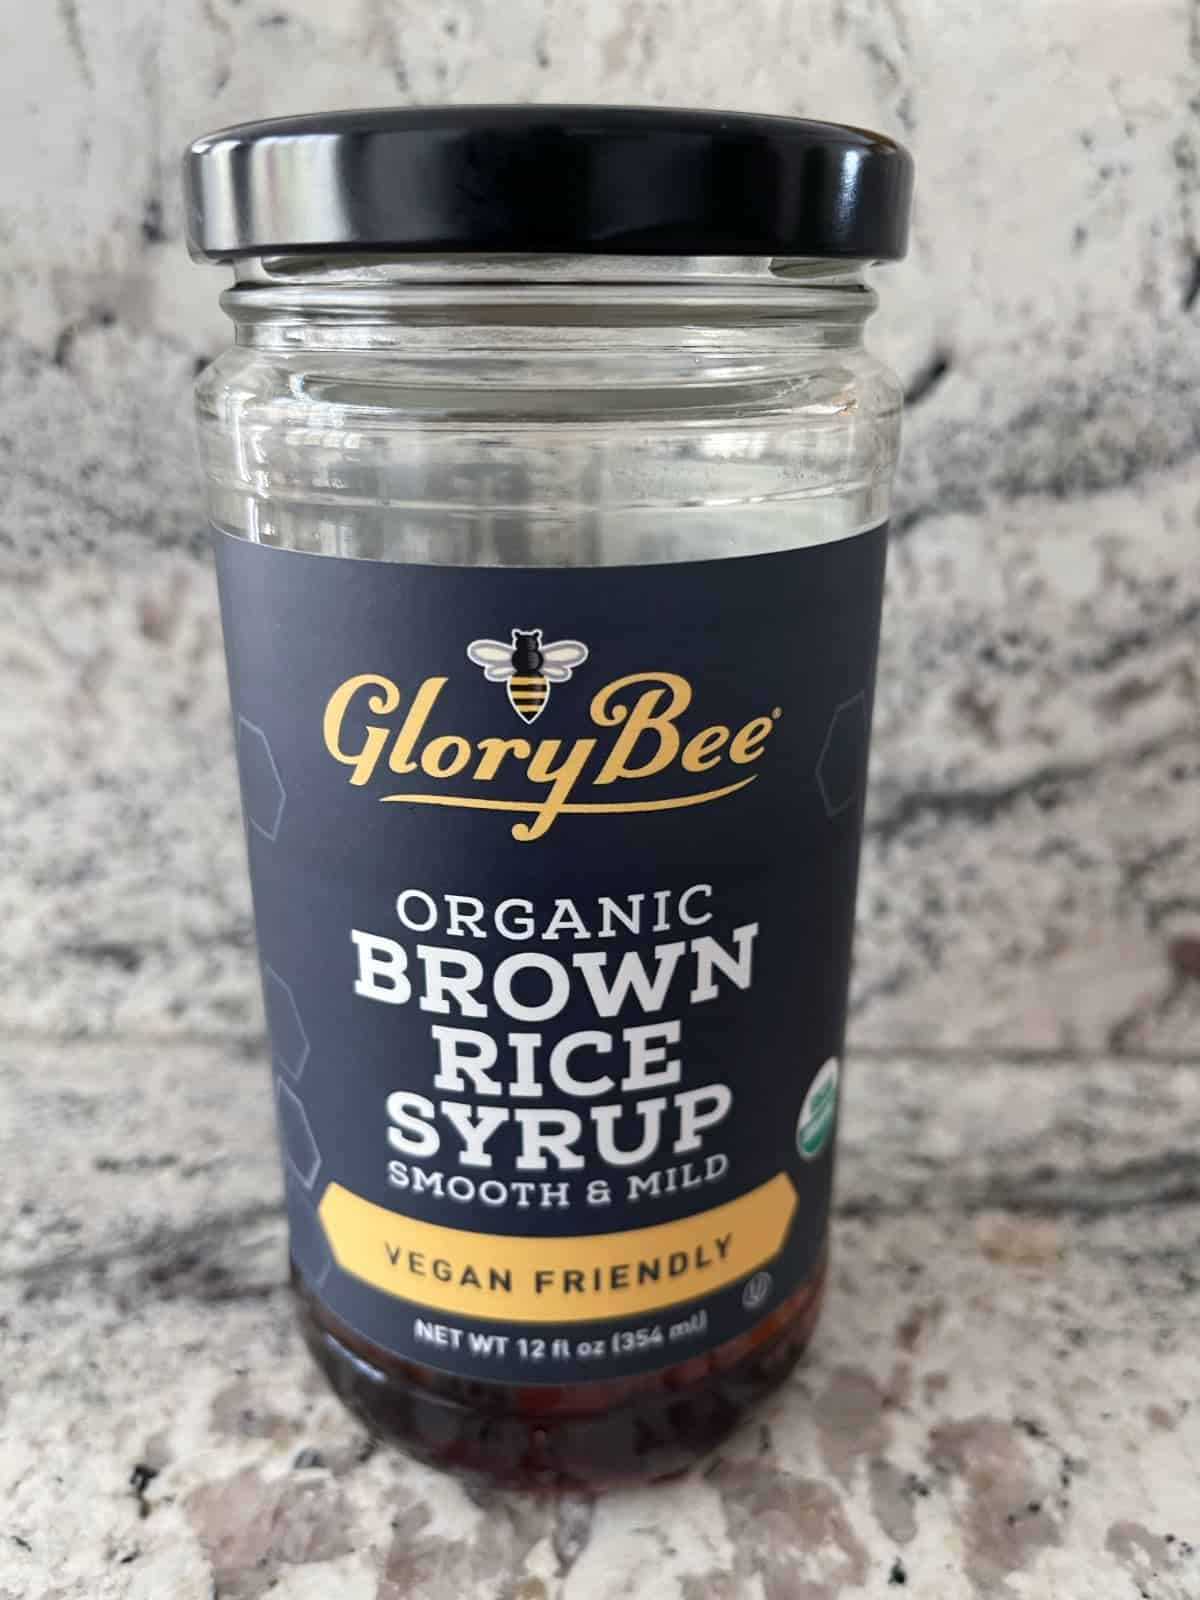 Jar of GloryBee Organic Brown Rice Syrup on granite.